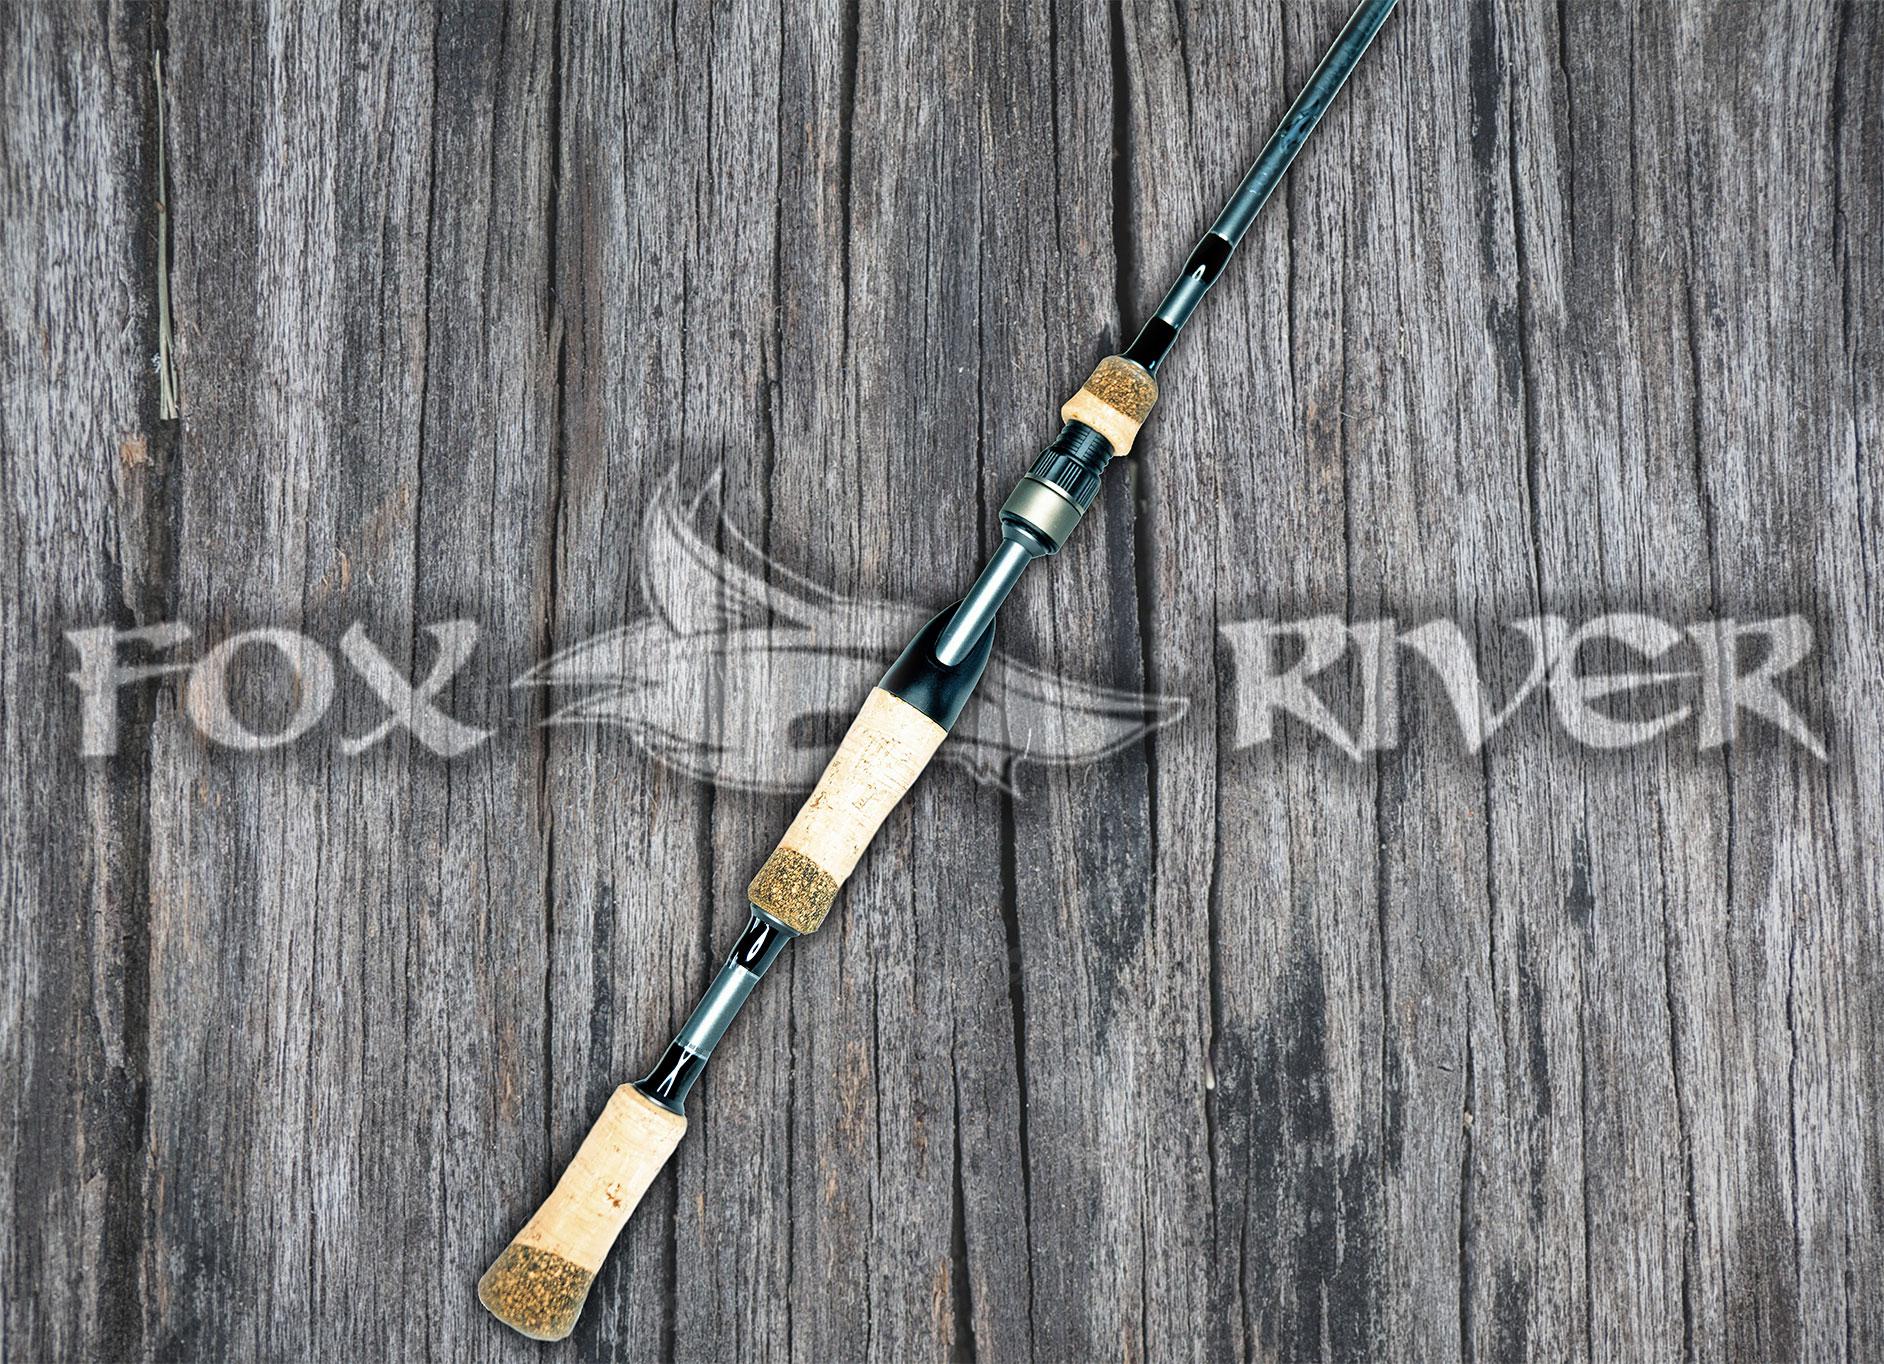 Fox River Lures and Rods - 7' 0 Medium Split-Grip Spinning Rod